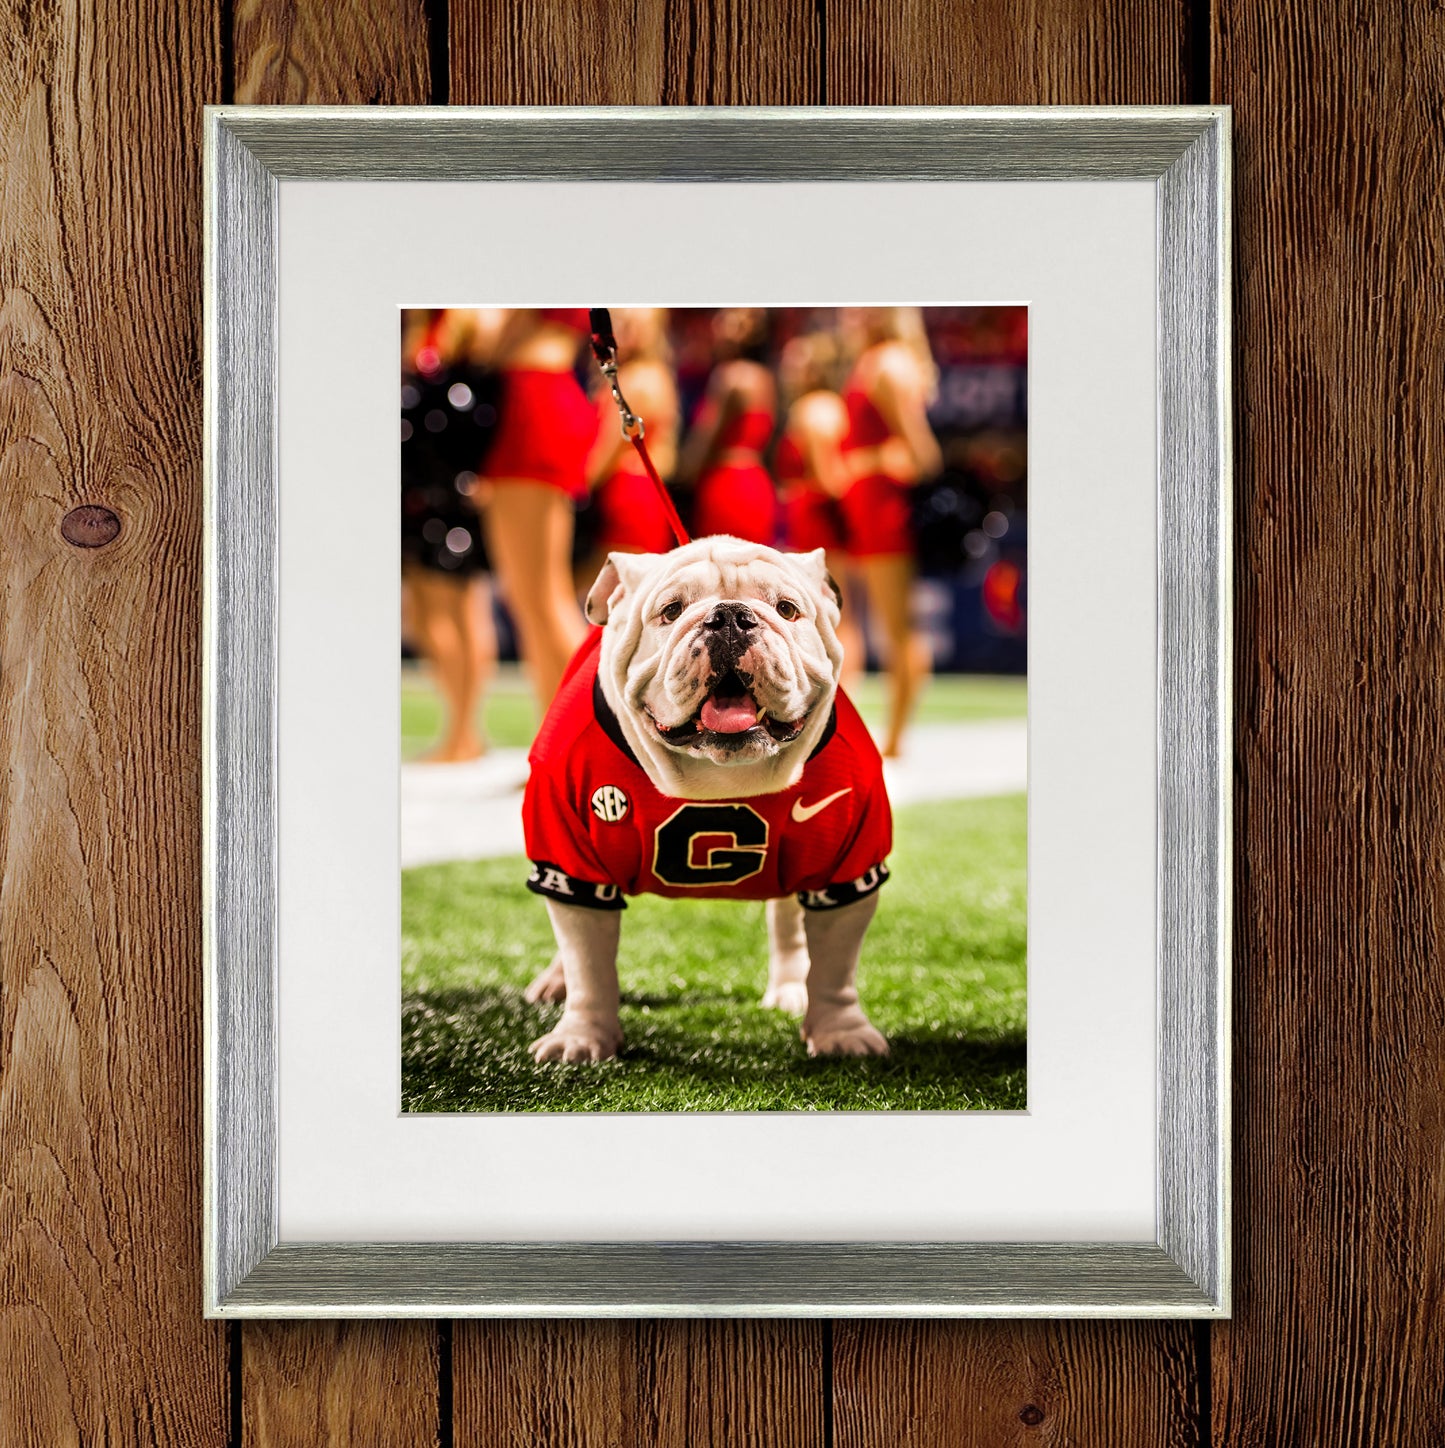 SEC Champion Uga X Photo Print & Canvas Wrap - Georgia Bulldogs Art